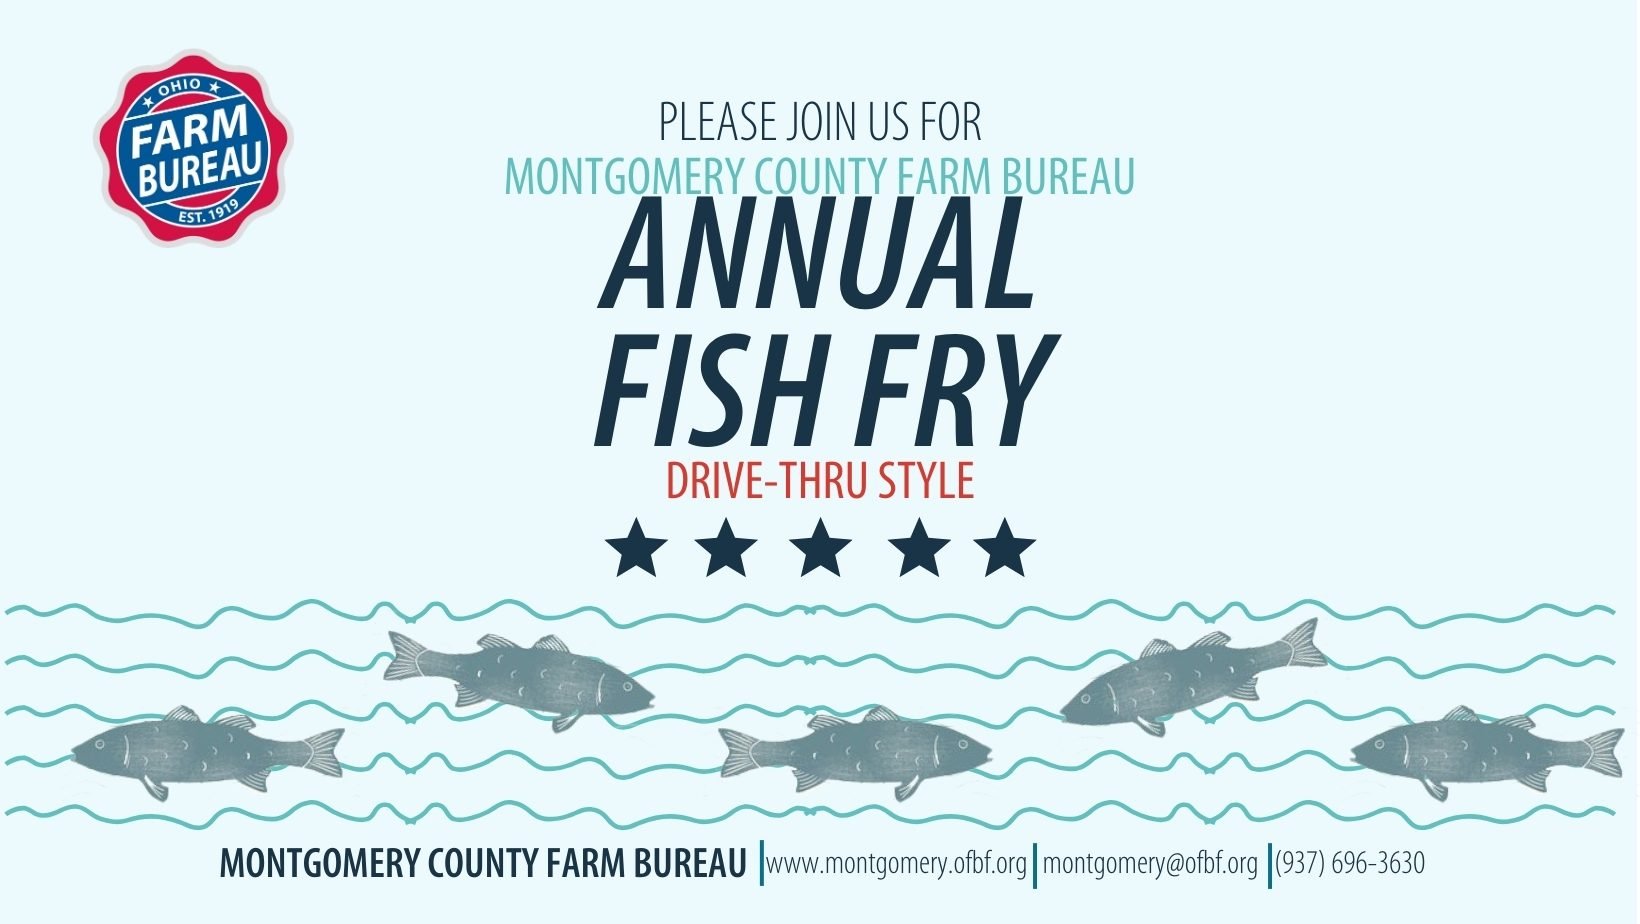 Membership Kickoff & Annual Fish Fry (Drive Thru Style) Ohio Farm Bureau